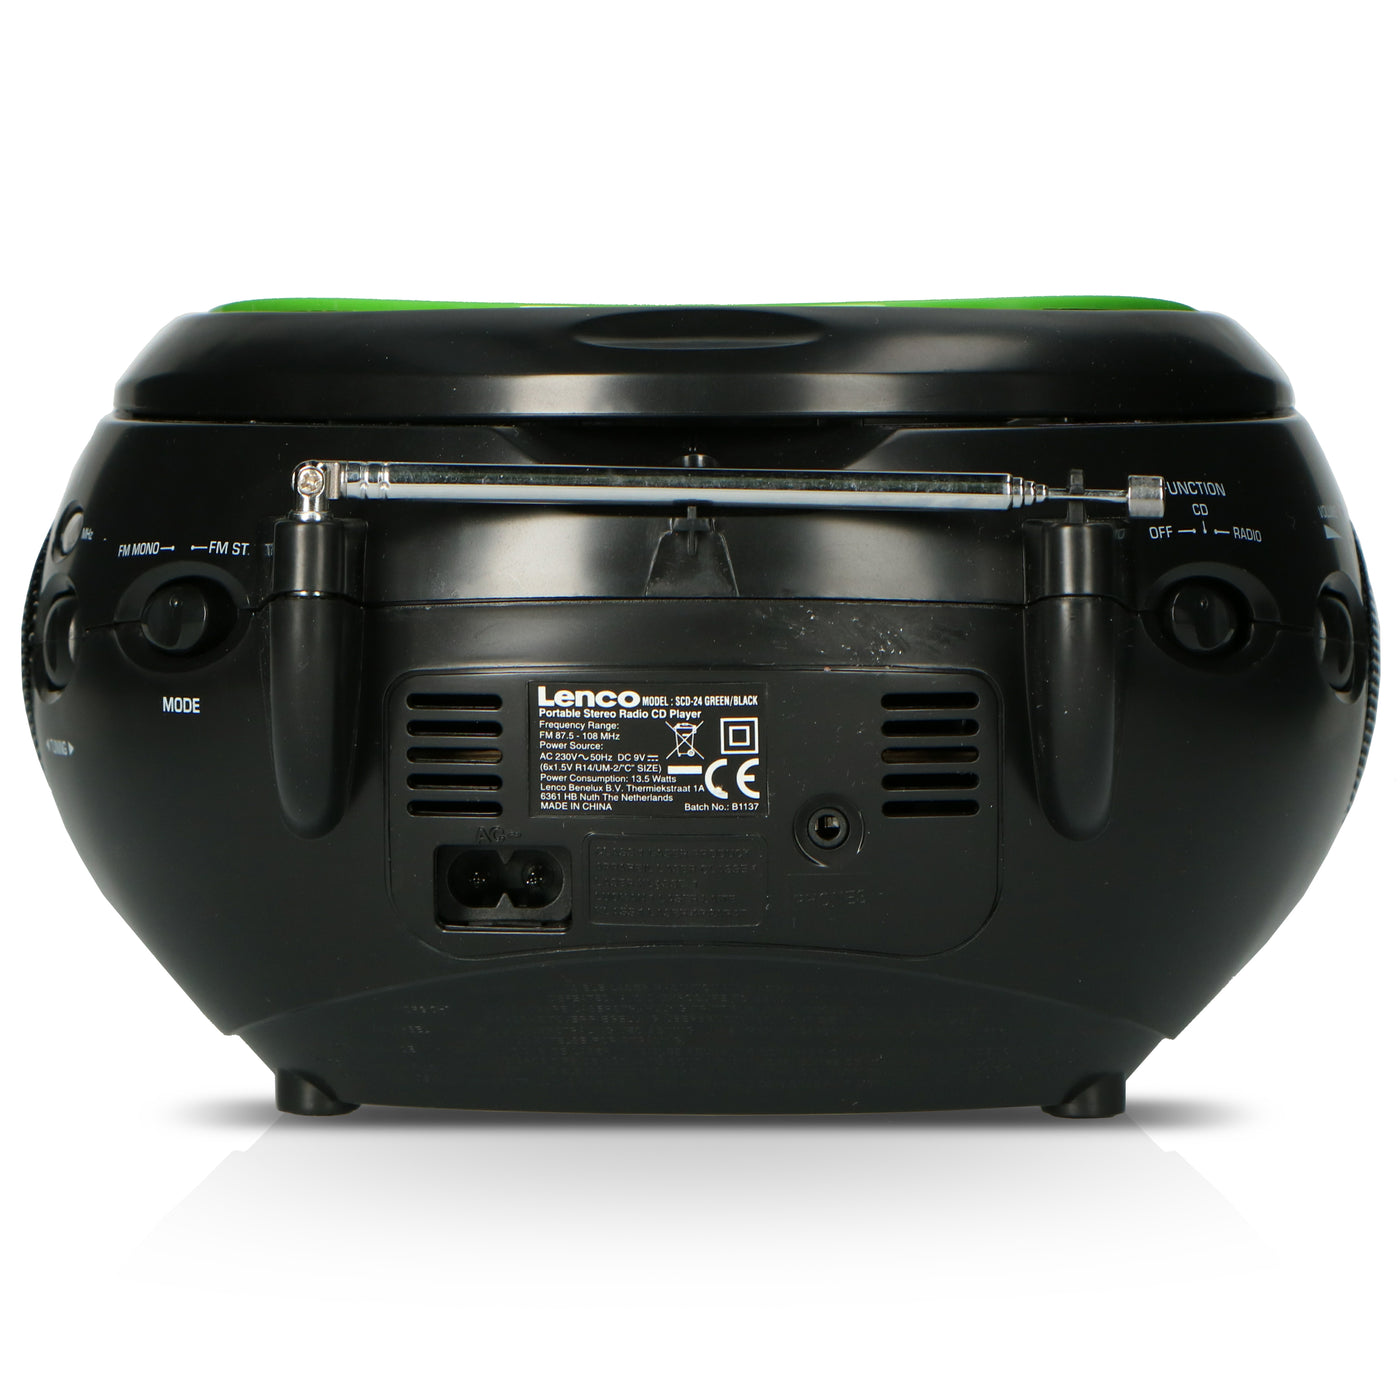 Lenco SCD-24 Green/Black - Radio portable avec lecteur CD - Vert/noir